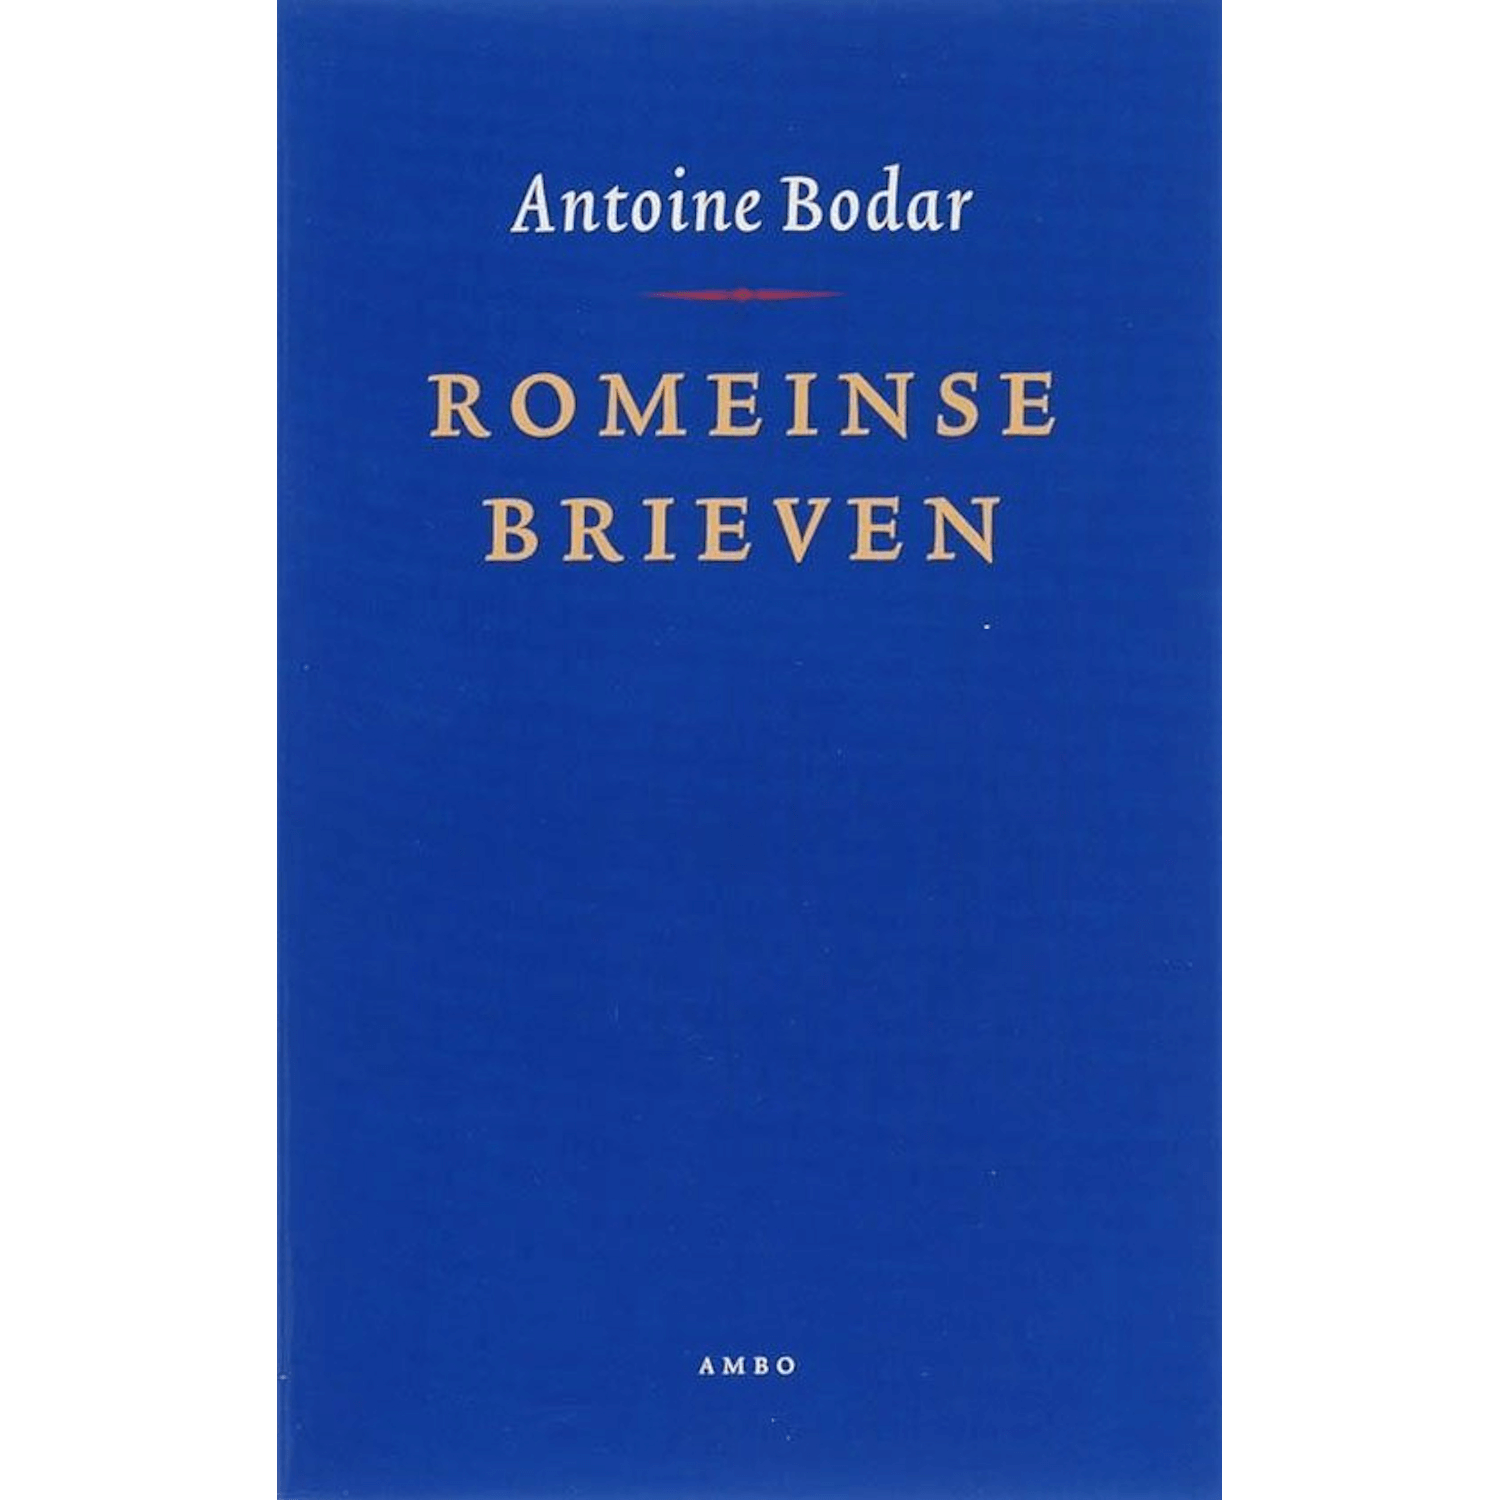 Antoine Bodar - ROMEINSE BRIEVEN